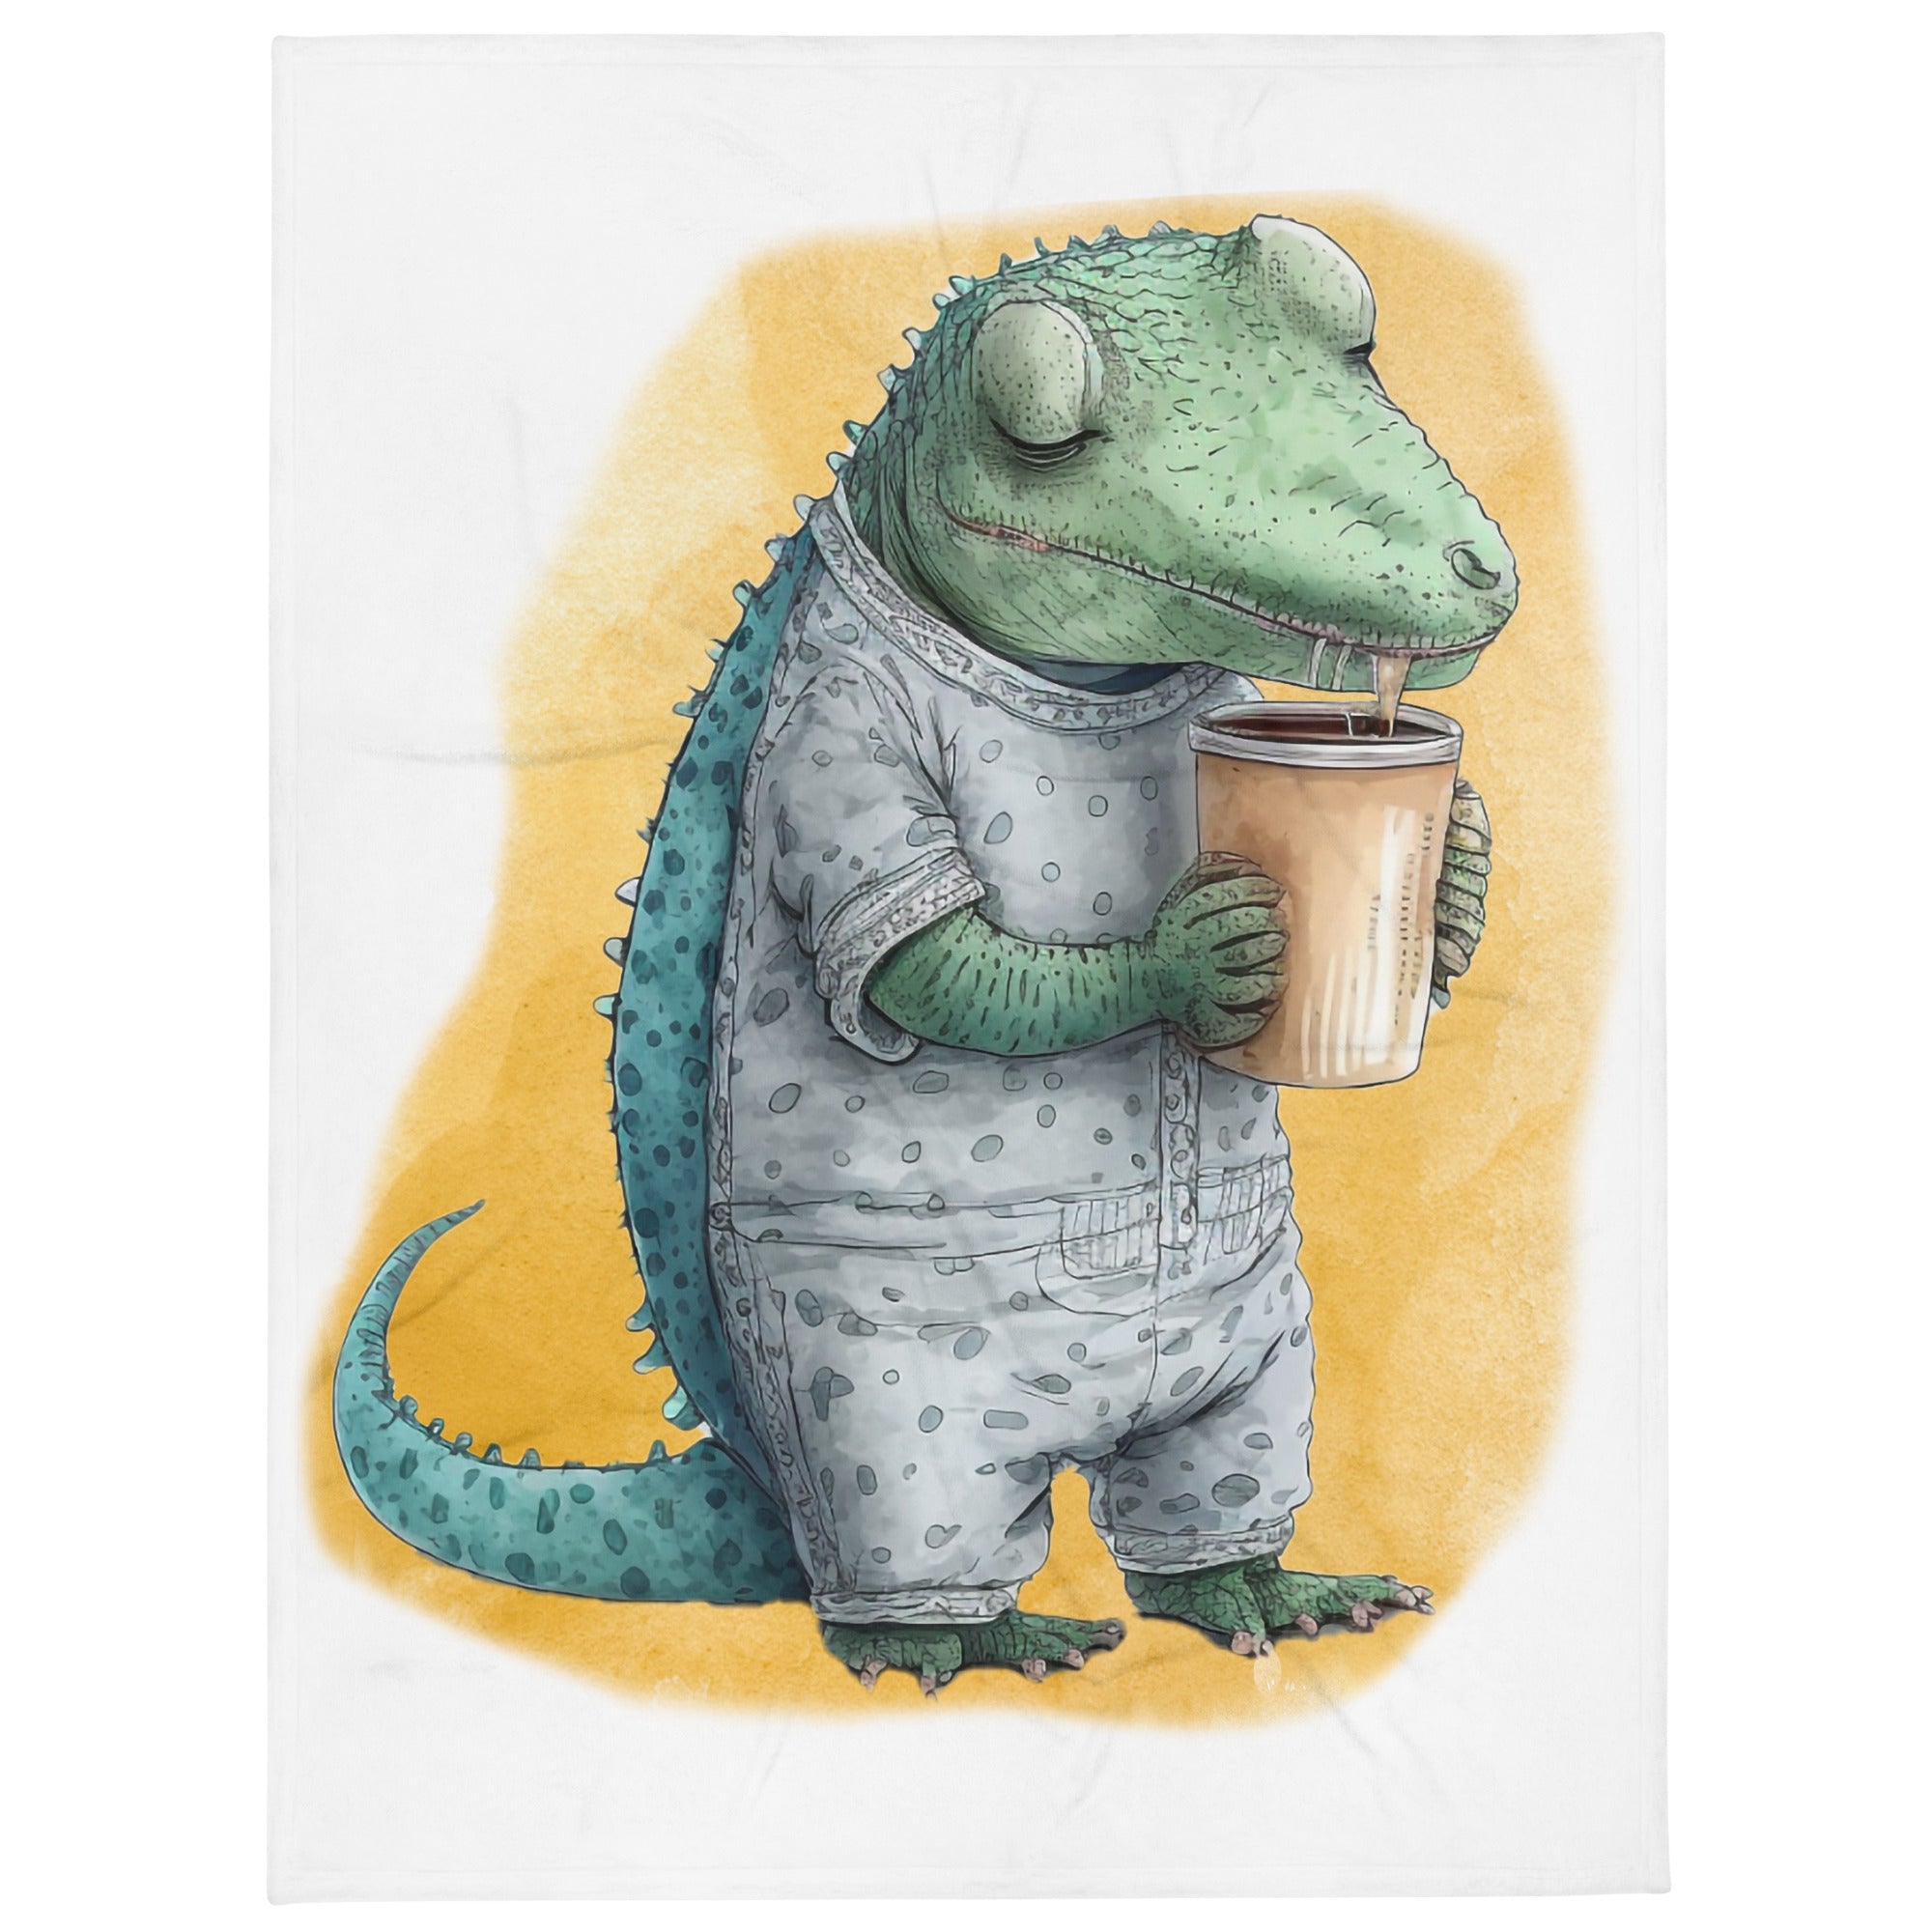 Sleepy Crocodile 100% Polyester Soft Silk Touch Fabric Throw Blanket - Cozy, Durable and Adorable